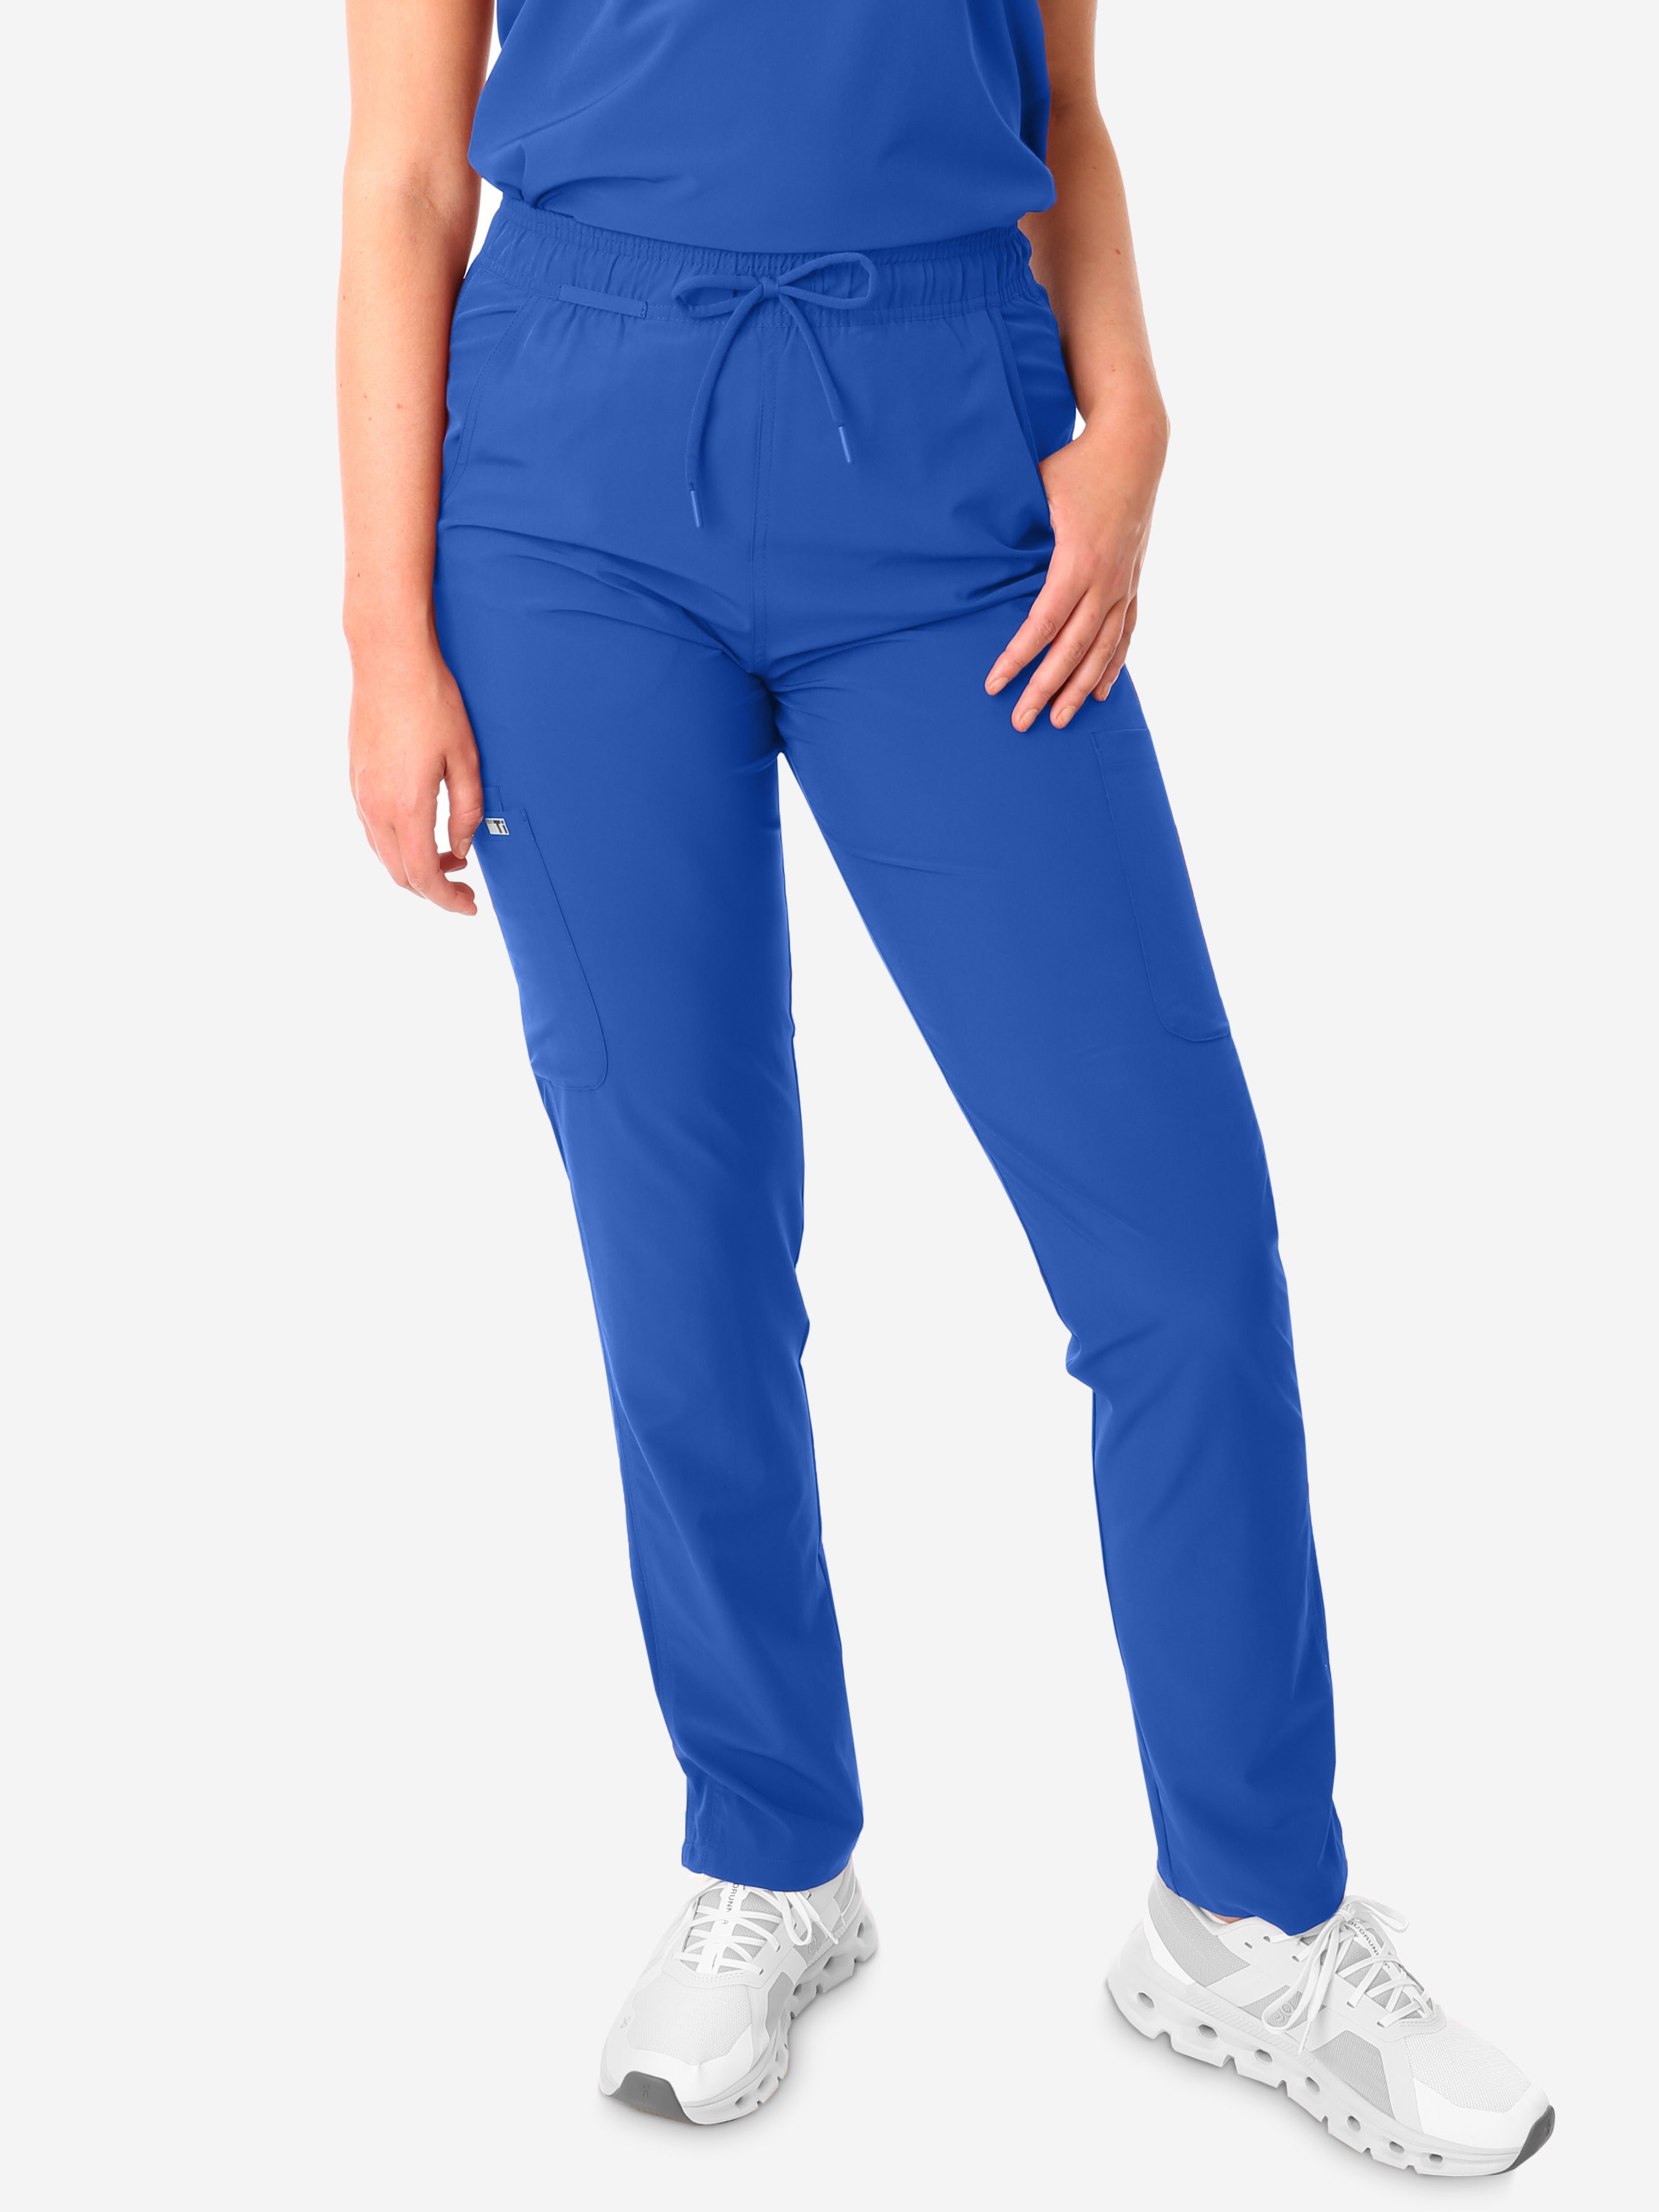 TiScrubs Royal Blue Women&#39;s Stretch 9-Pocket Pants Front View Pants Only